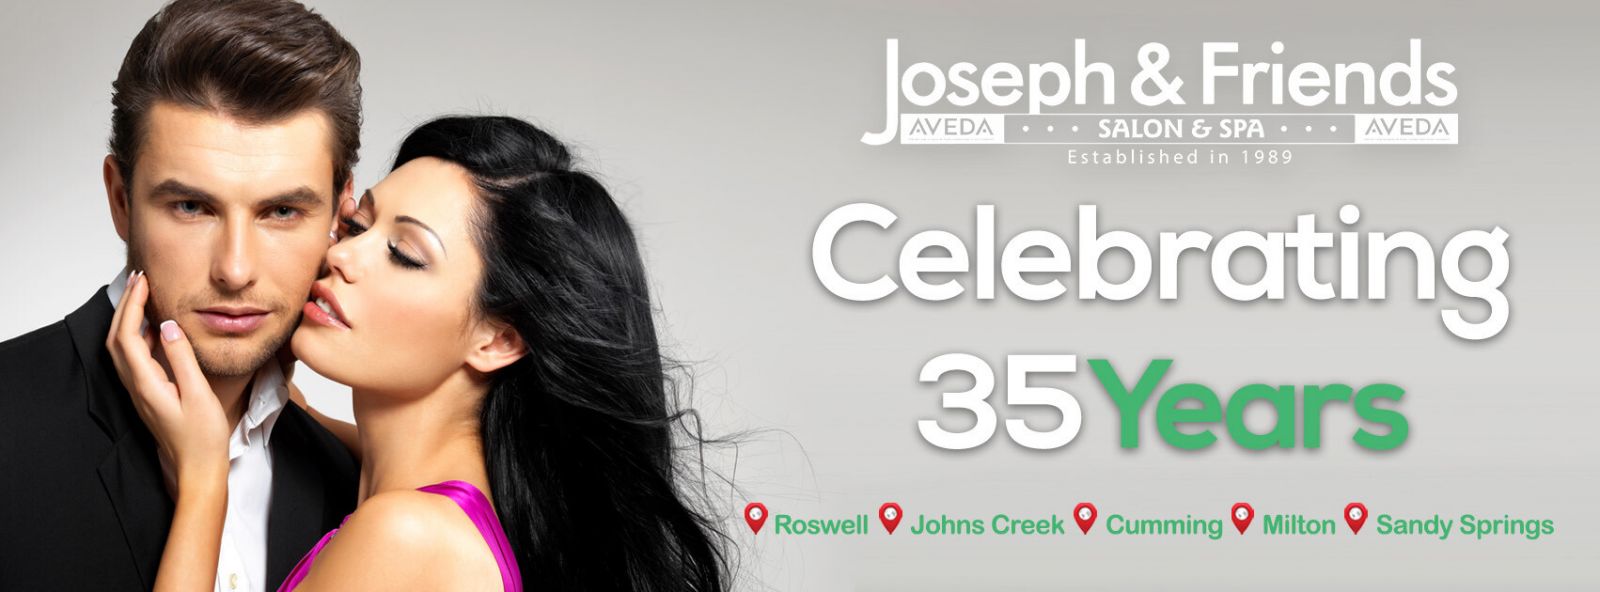 Joseph and Friends 35 Years Celebration